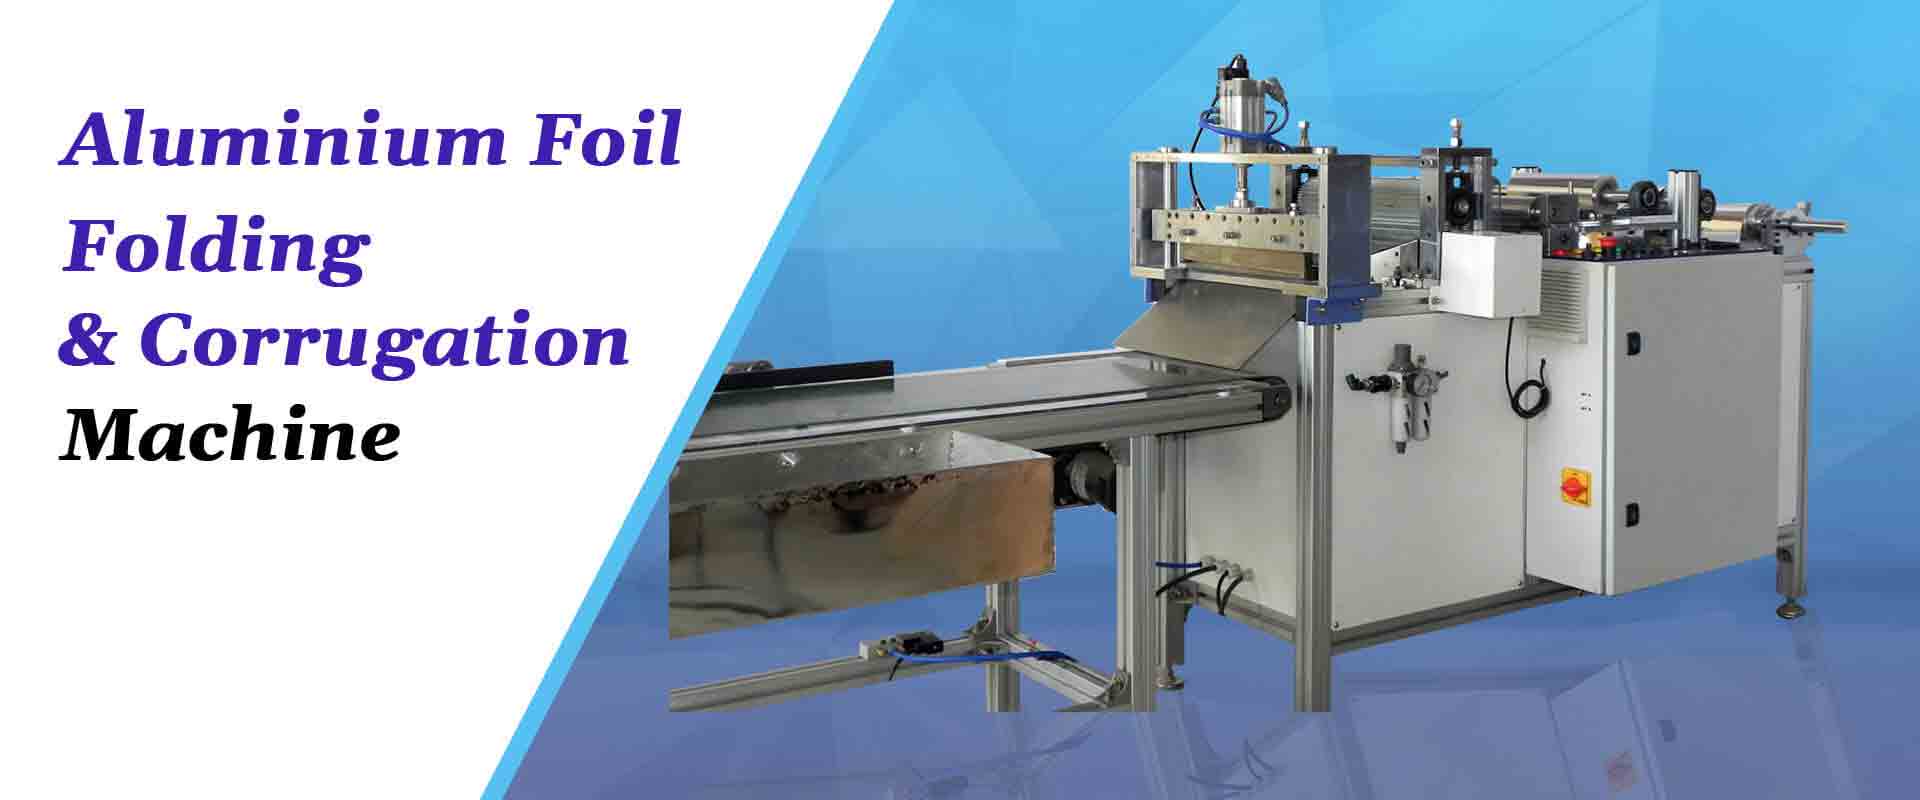 Aluminium Foil Folding & Corrugation Machine In Dhanbad